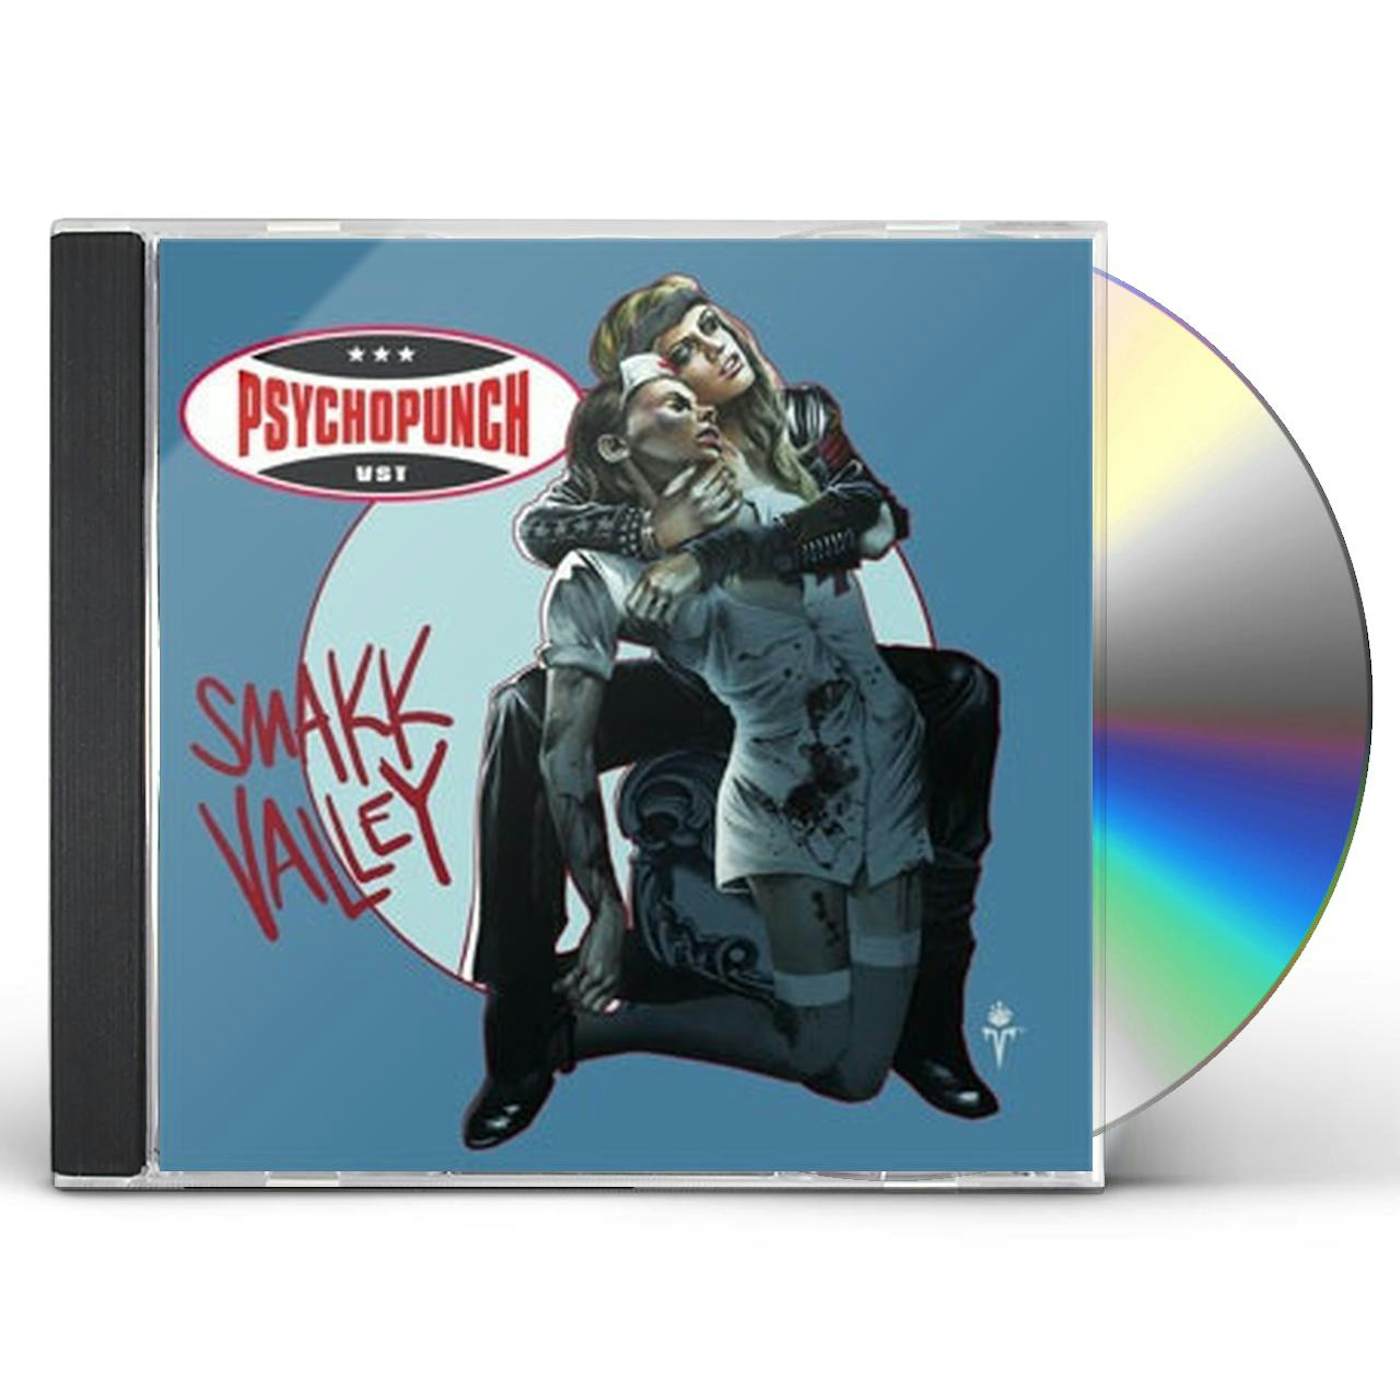 Psychopunch SMAKK VALLEY CD